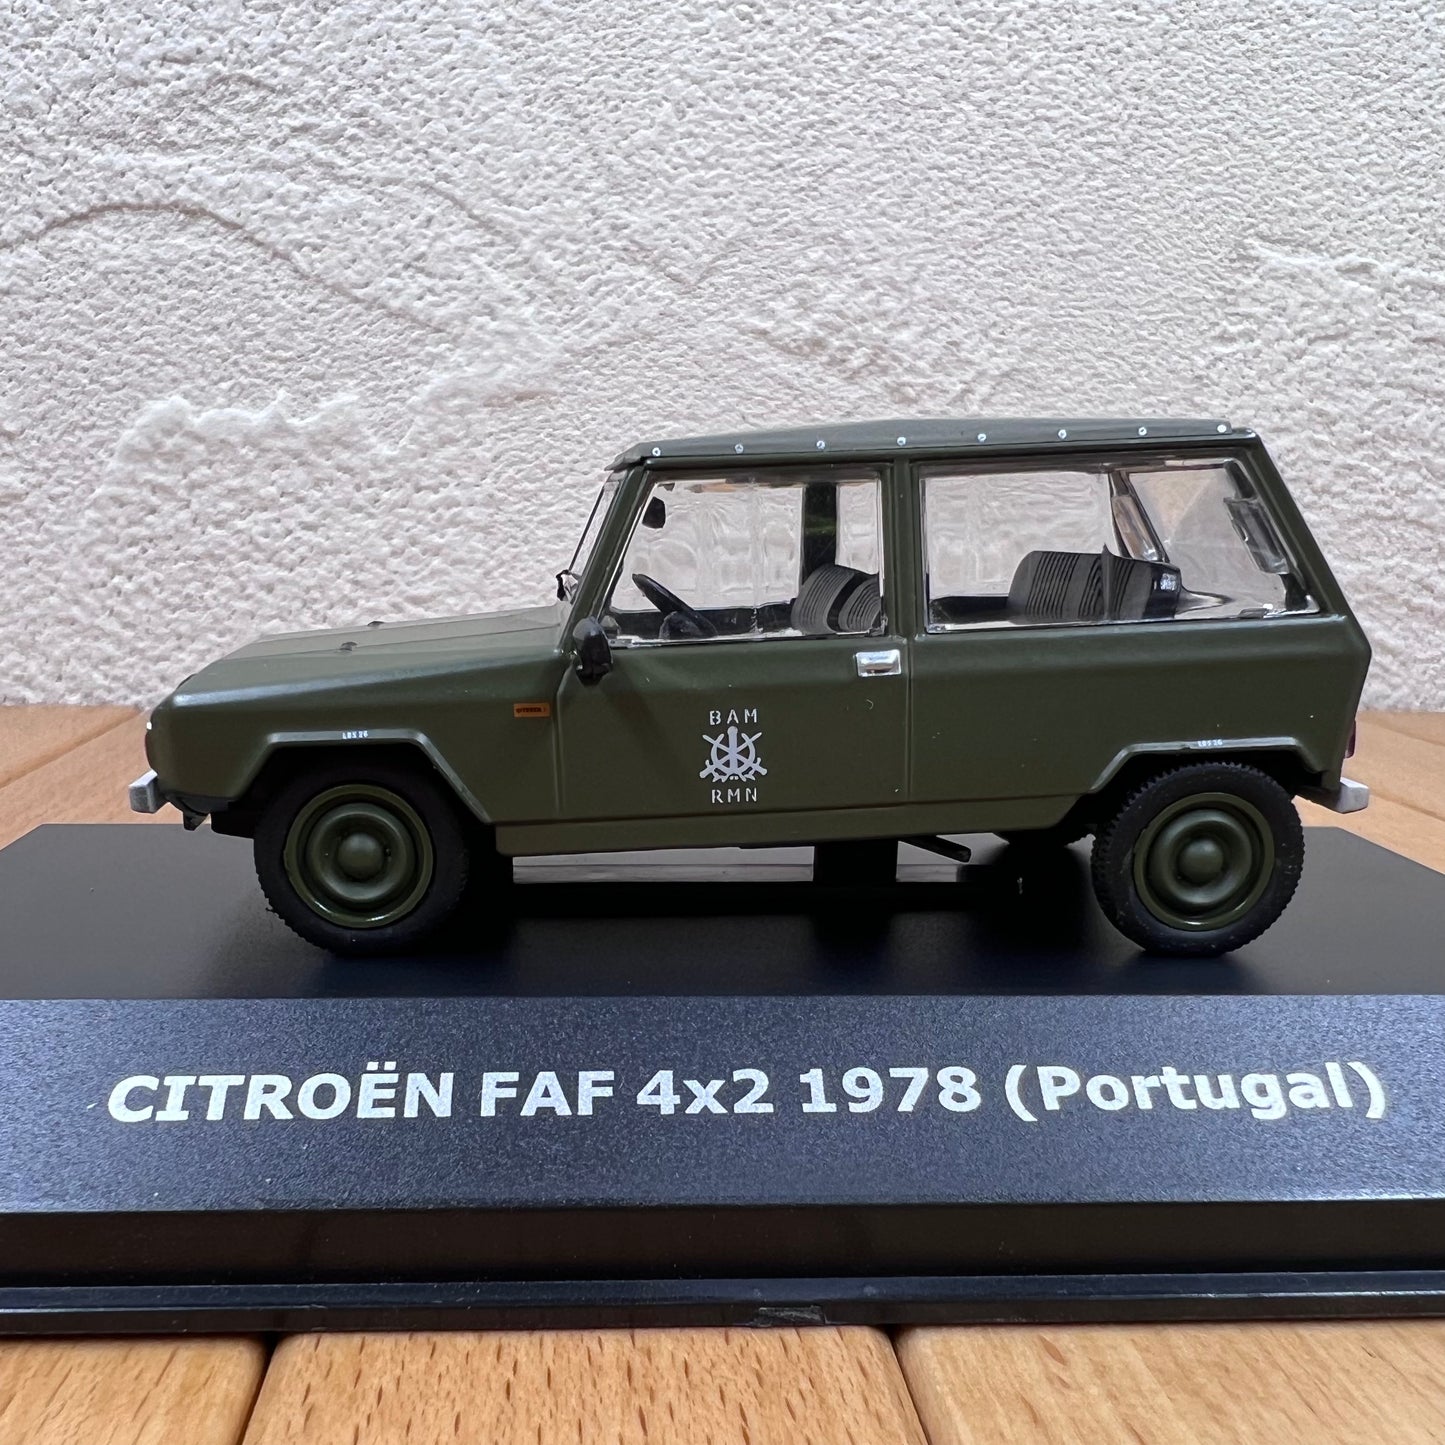 1/43 Scale 1978 Citroën FAF Diecast Model Car